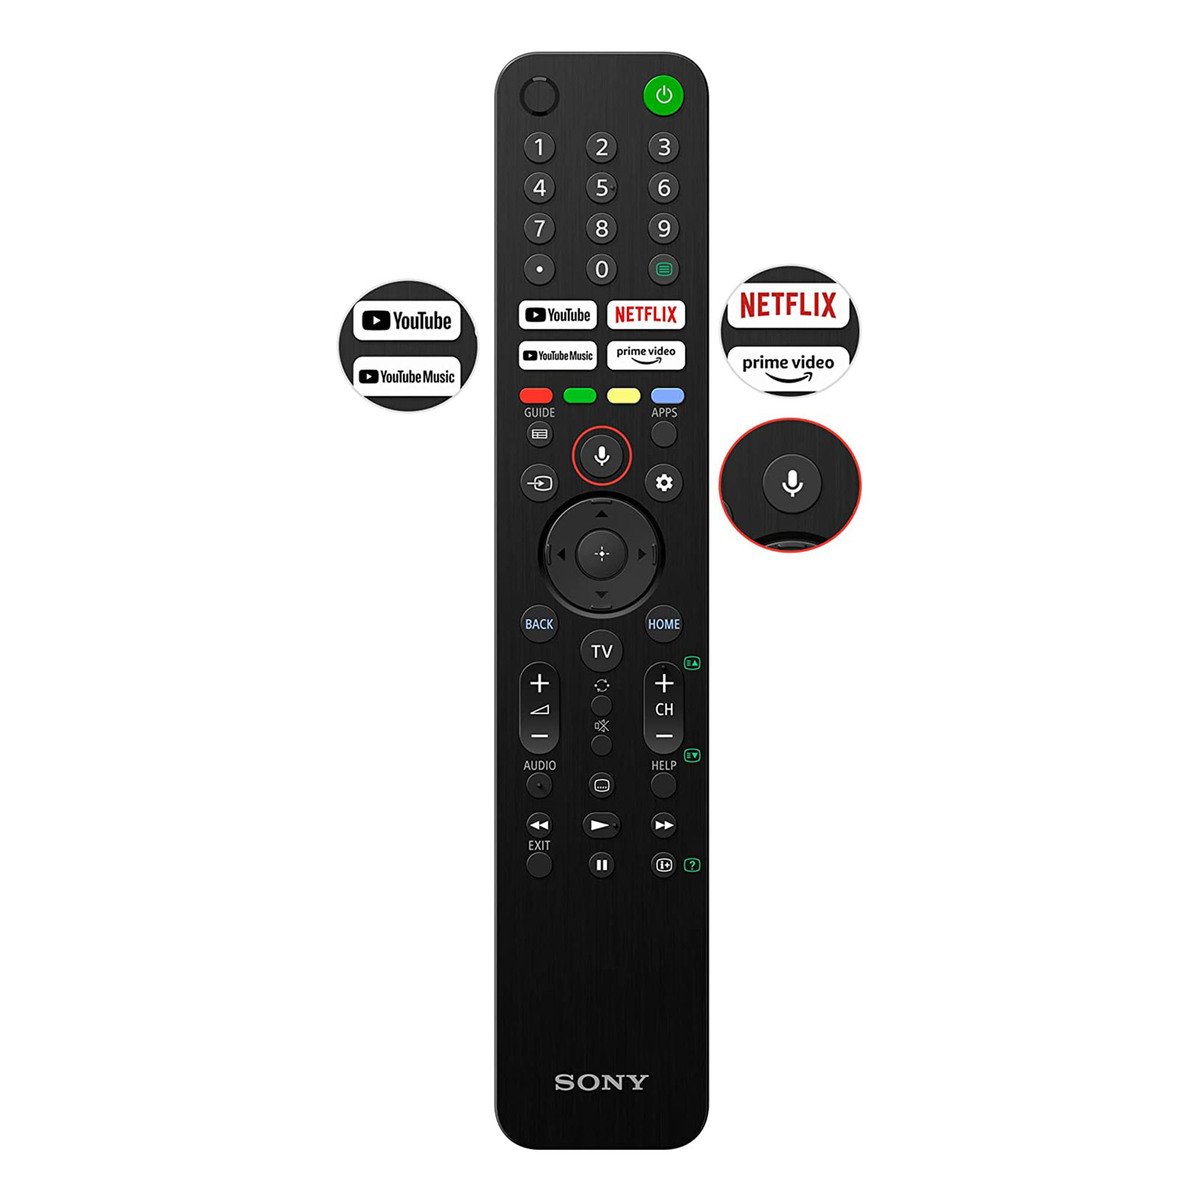 Sony Bravia 43 inches 4K UHD Google Smart LED TV, Black, KD-43X75K